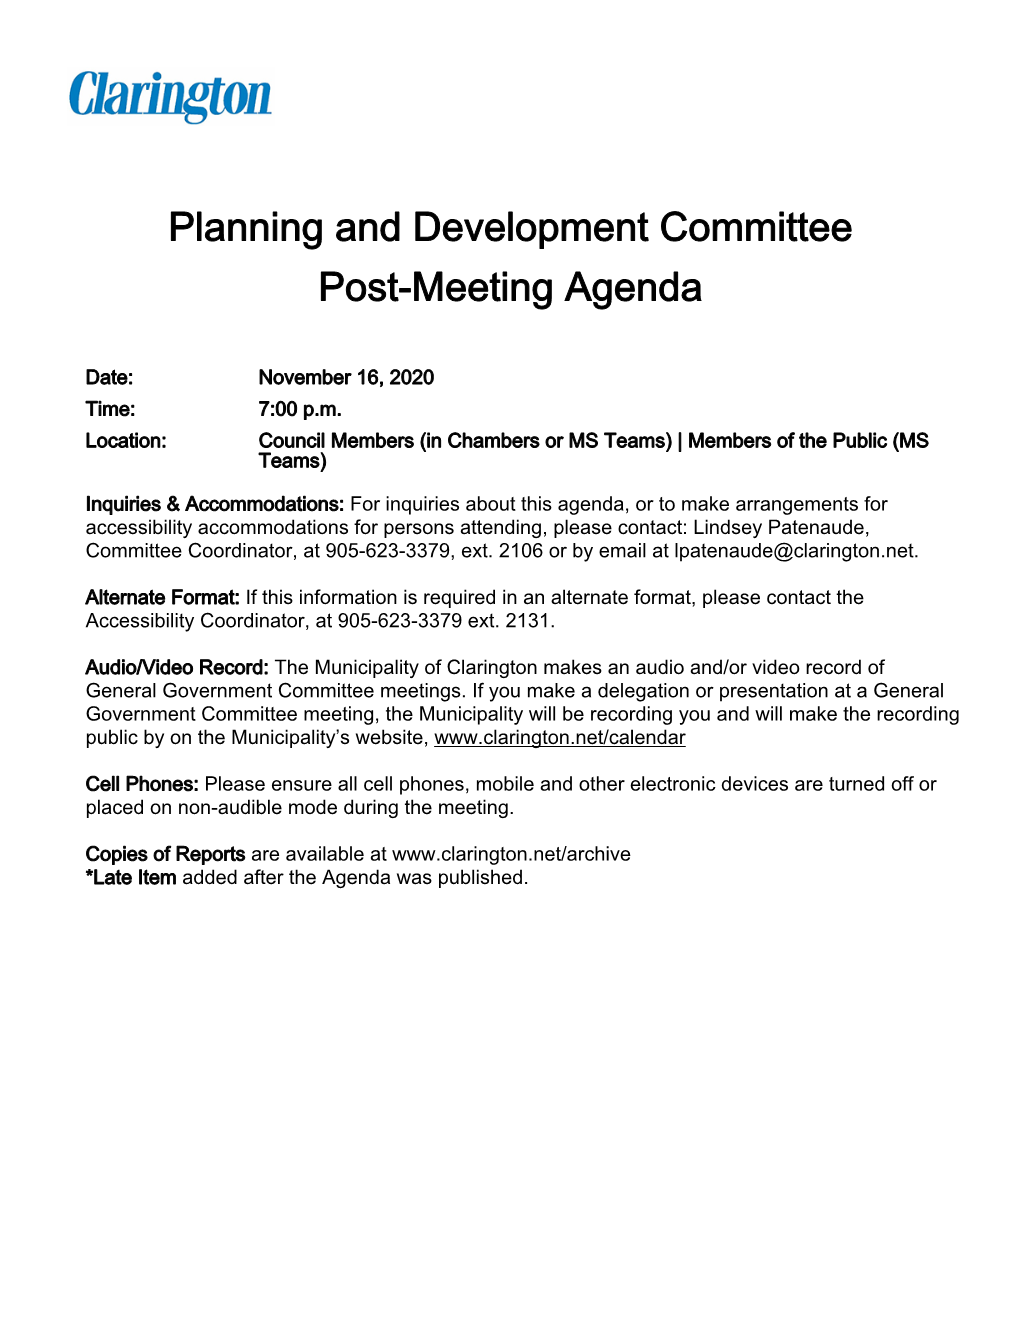 Planning and Development Committee Post-Meeting Agenda